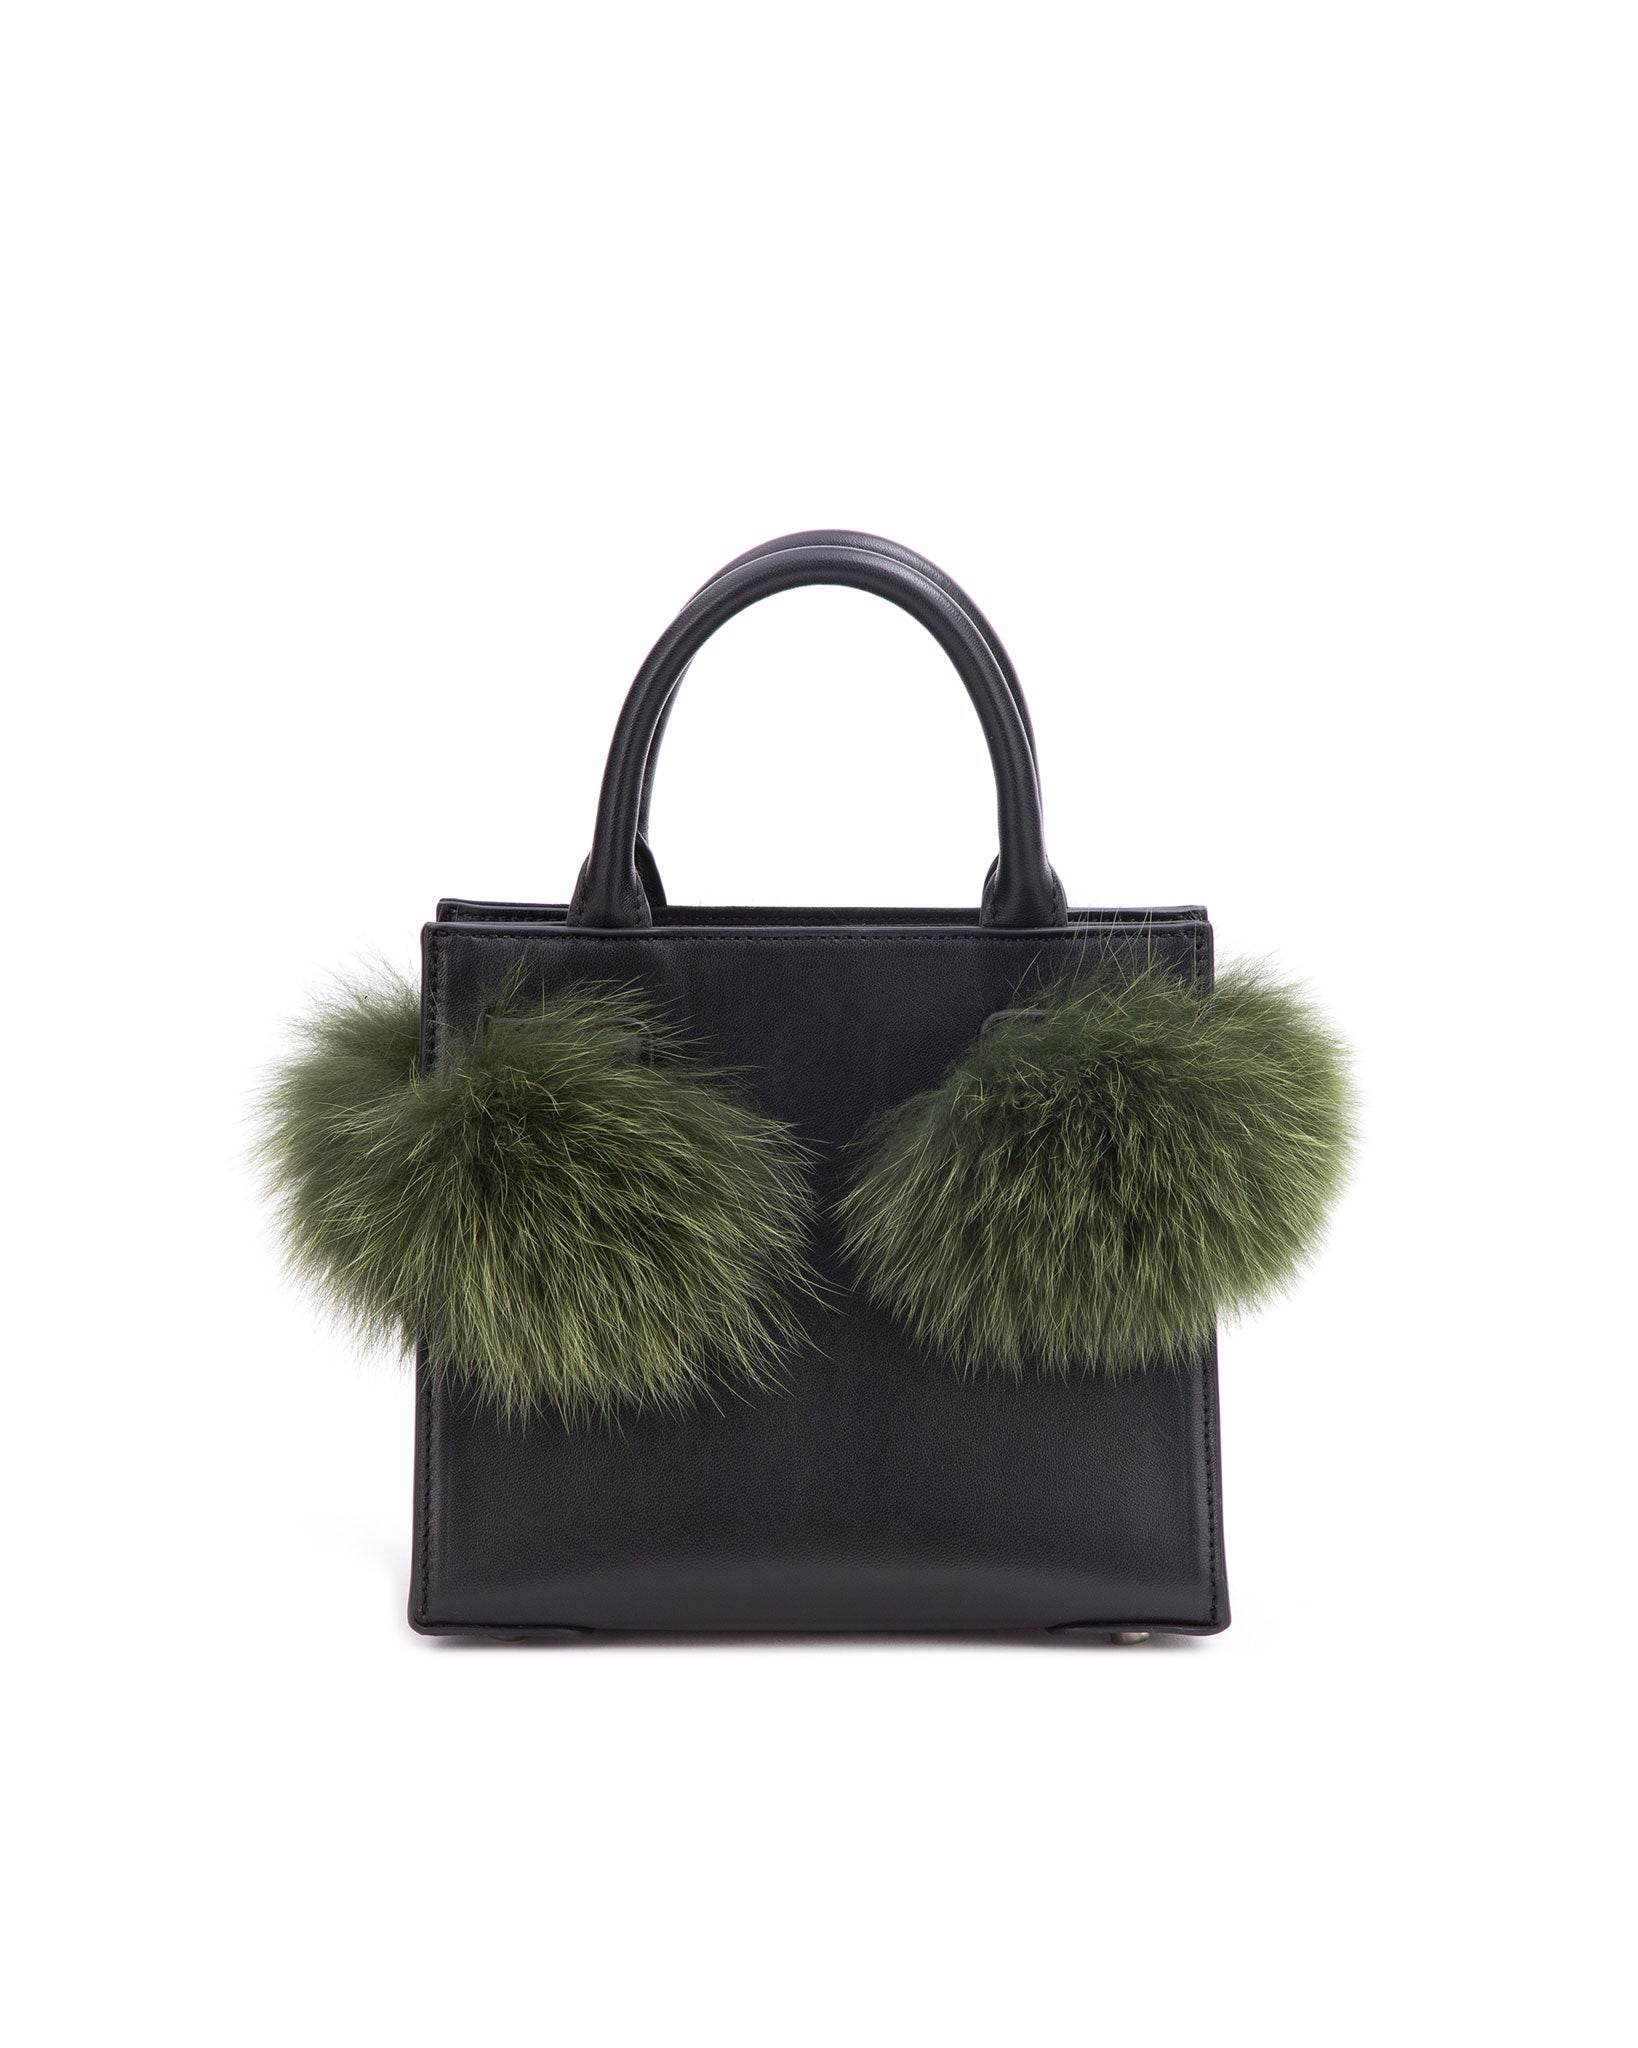 Real Fox Fur Handbag Black Shoulder Bag Women Fluffy Tote 